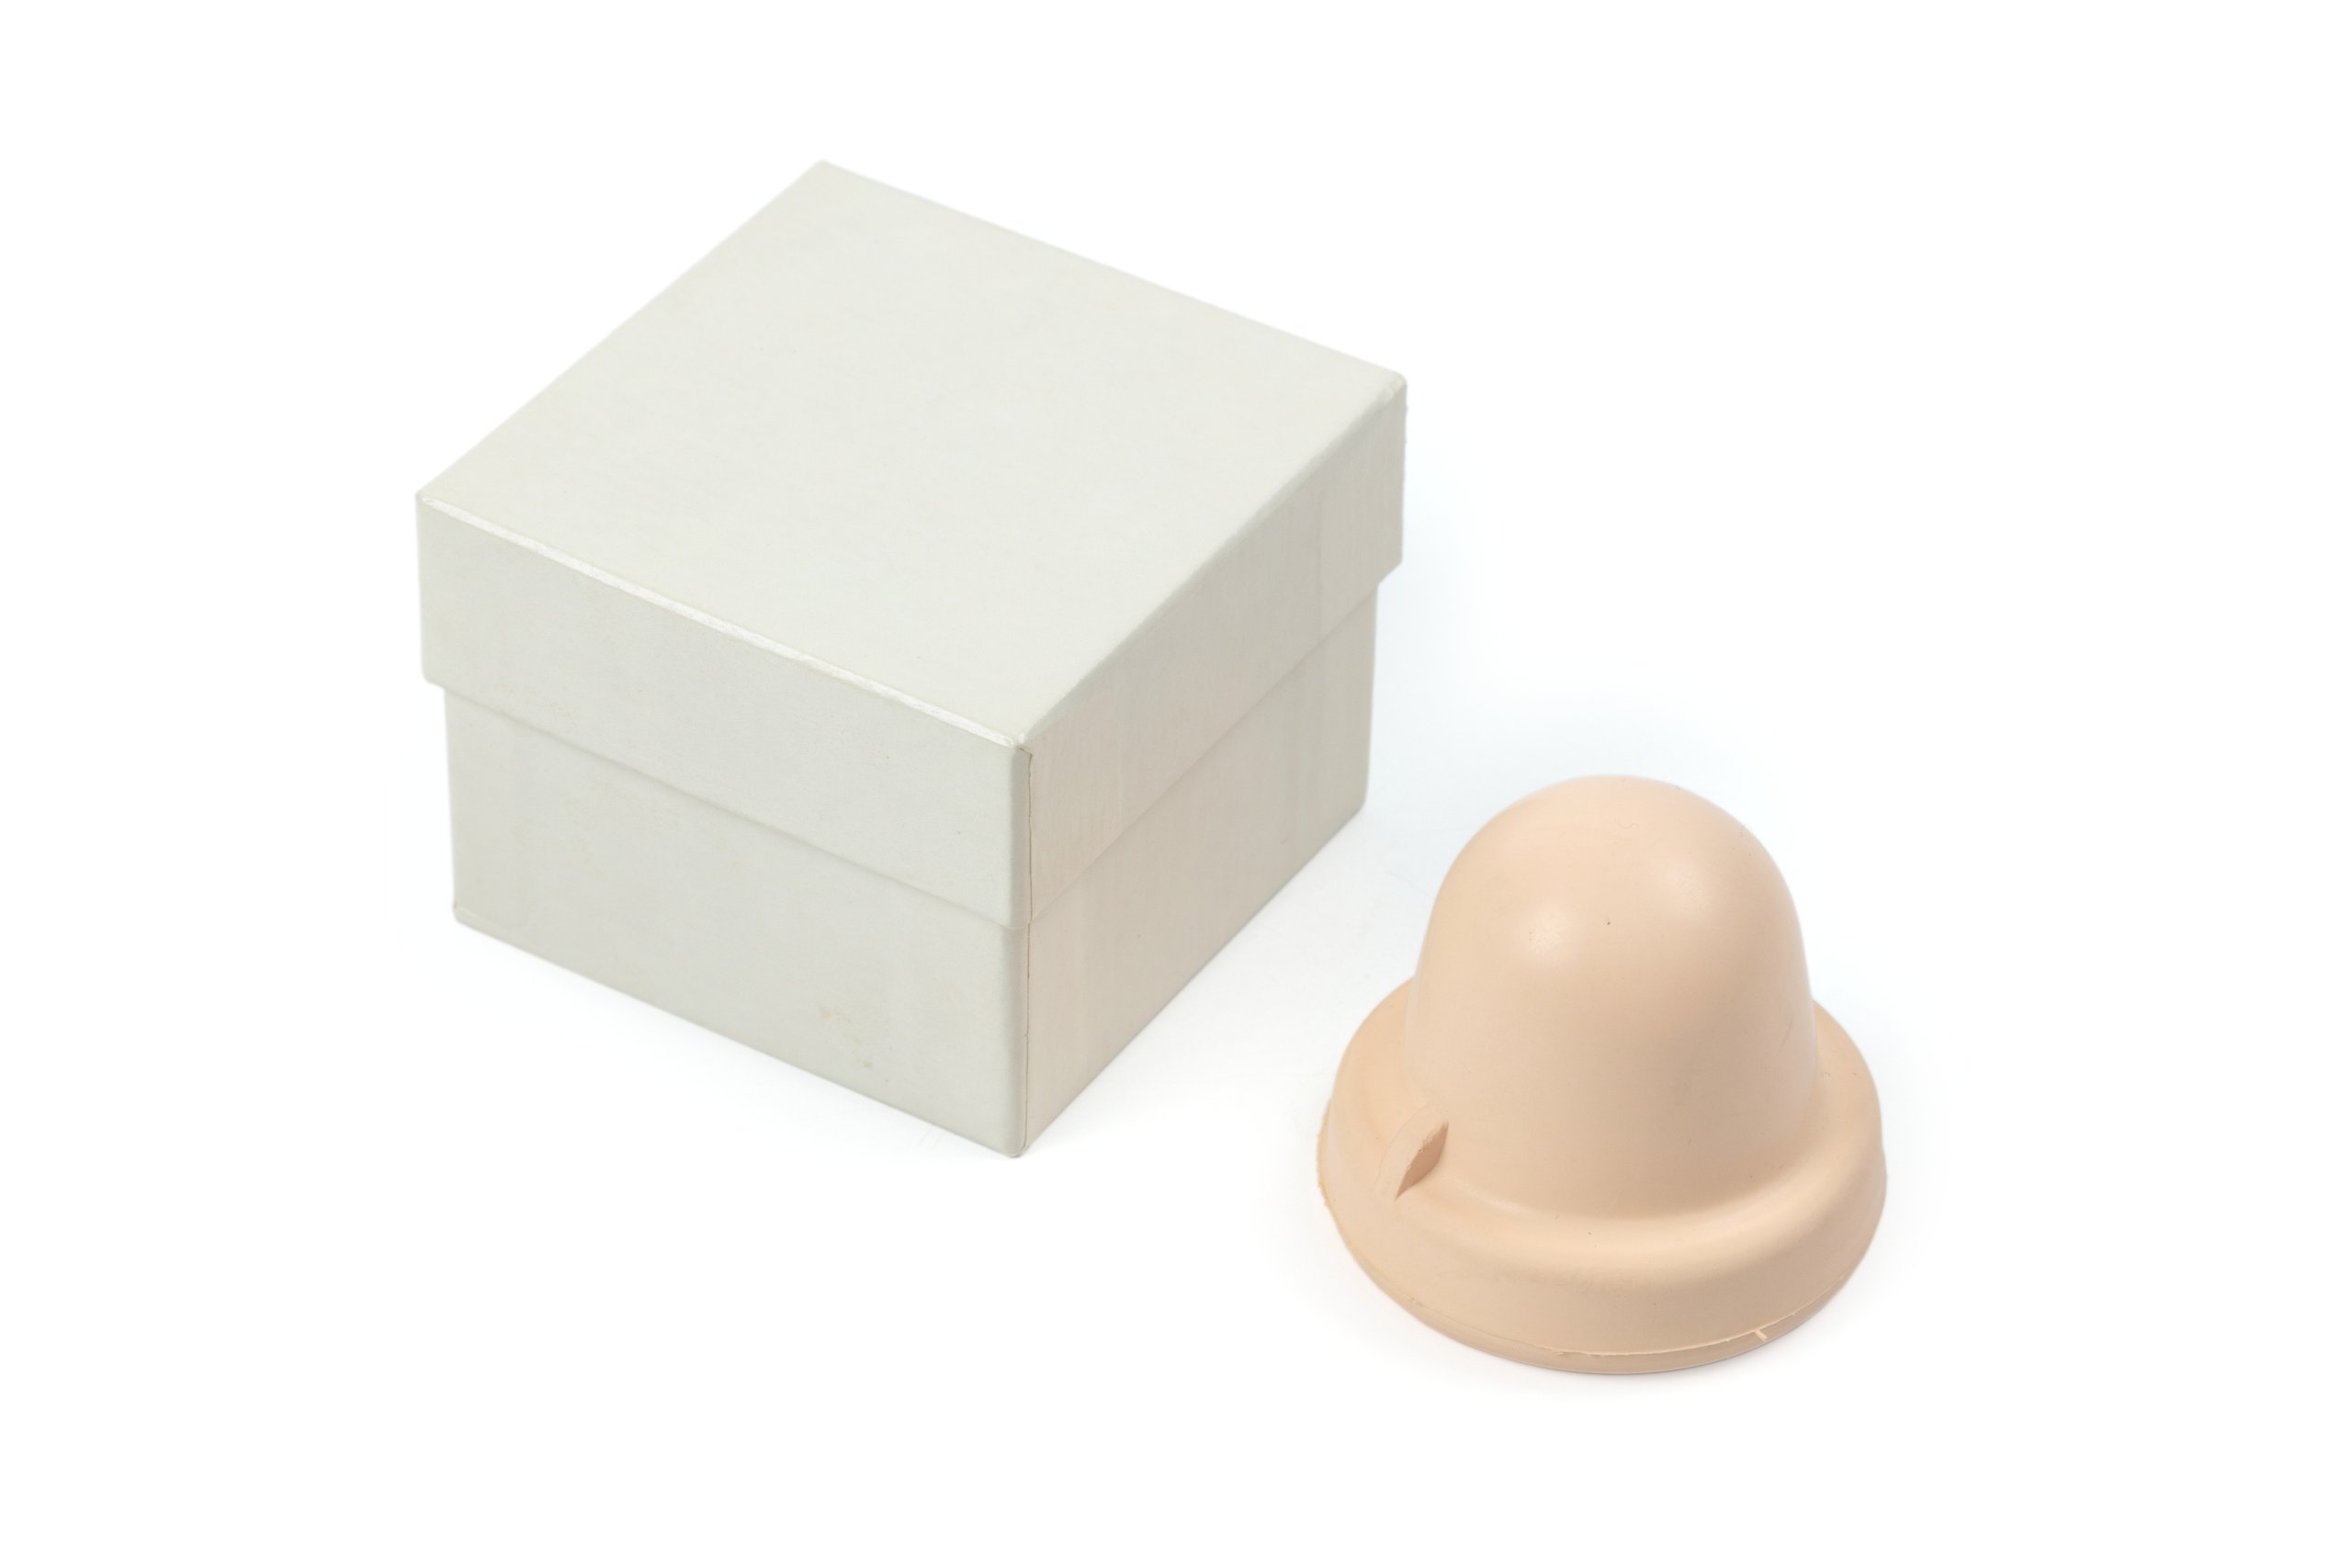 Contraceptive cervical cap